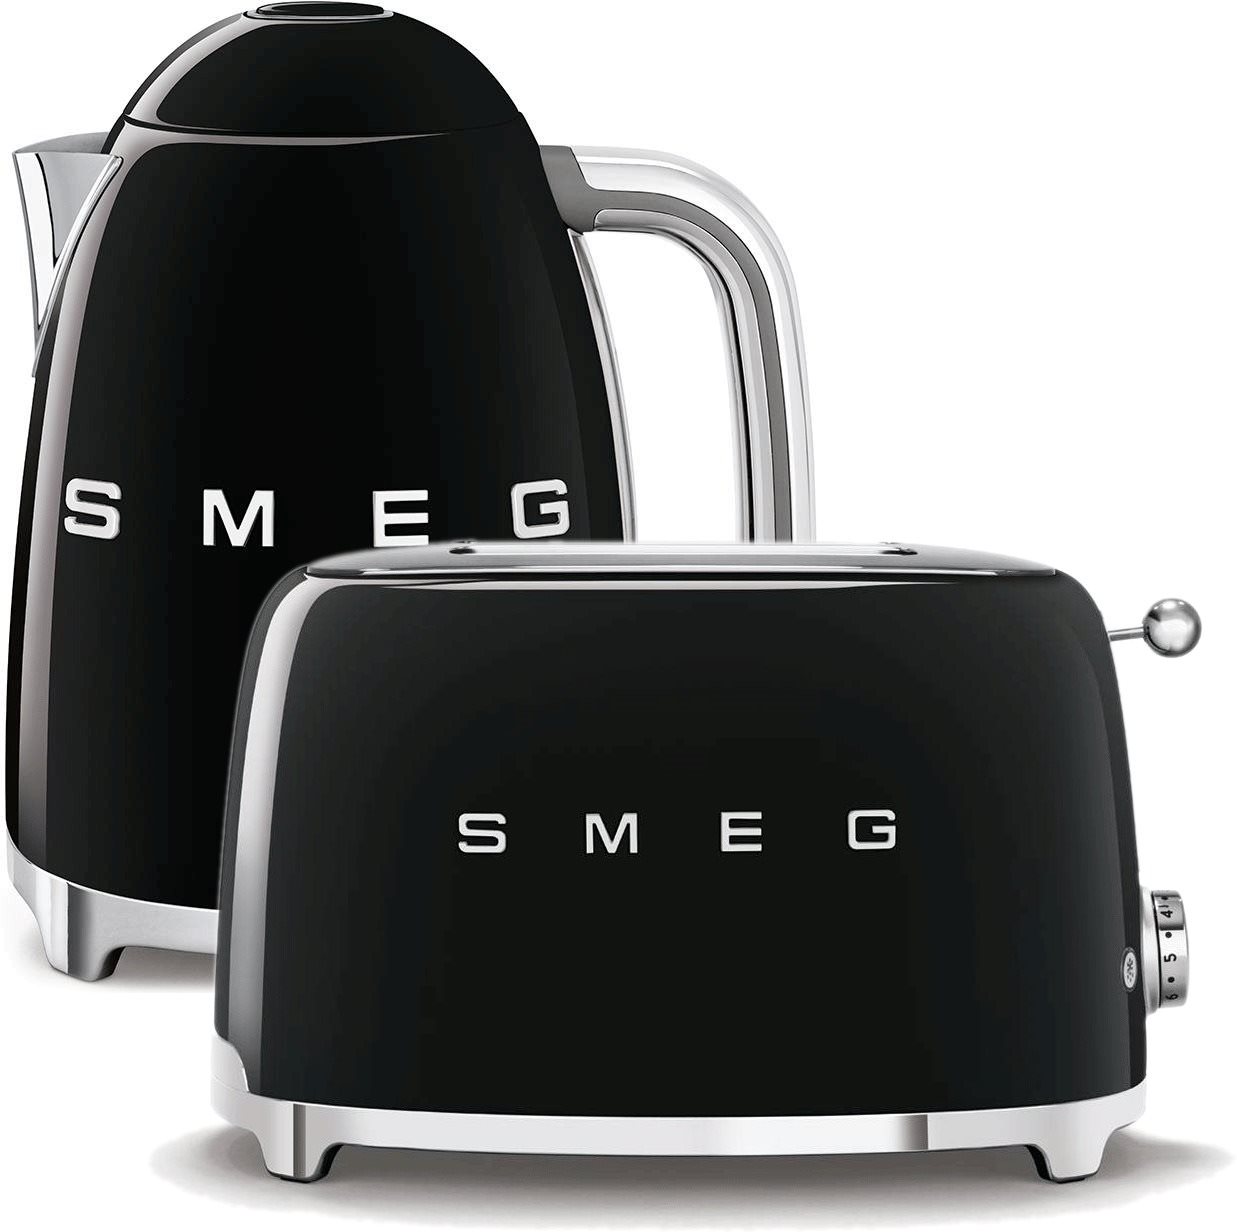 rychlovarná konvice SMEG 50's Retro Style 1,7l černá + topinkovač SMEG 50's Retro Style 2x2 černý 95